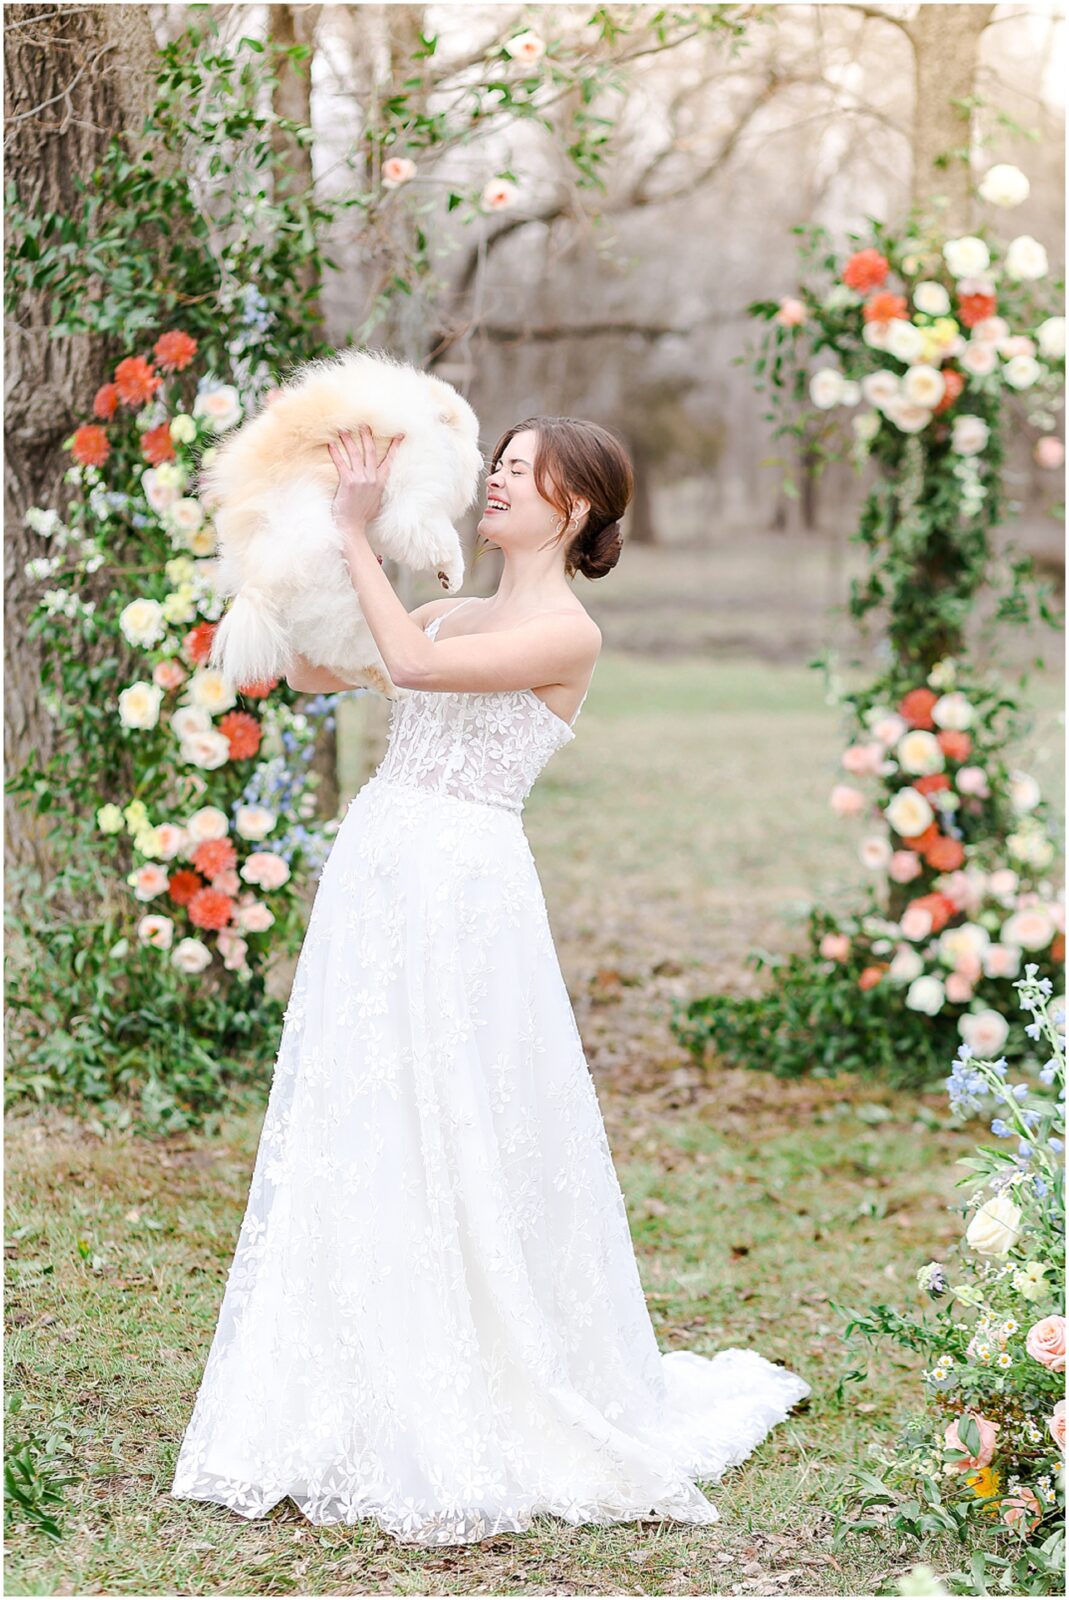 puppy dog wedding photos - engagement photos with your dog - how to take photos with your dog - wedding photography kansas city 